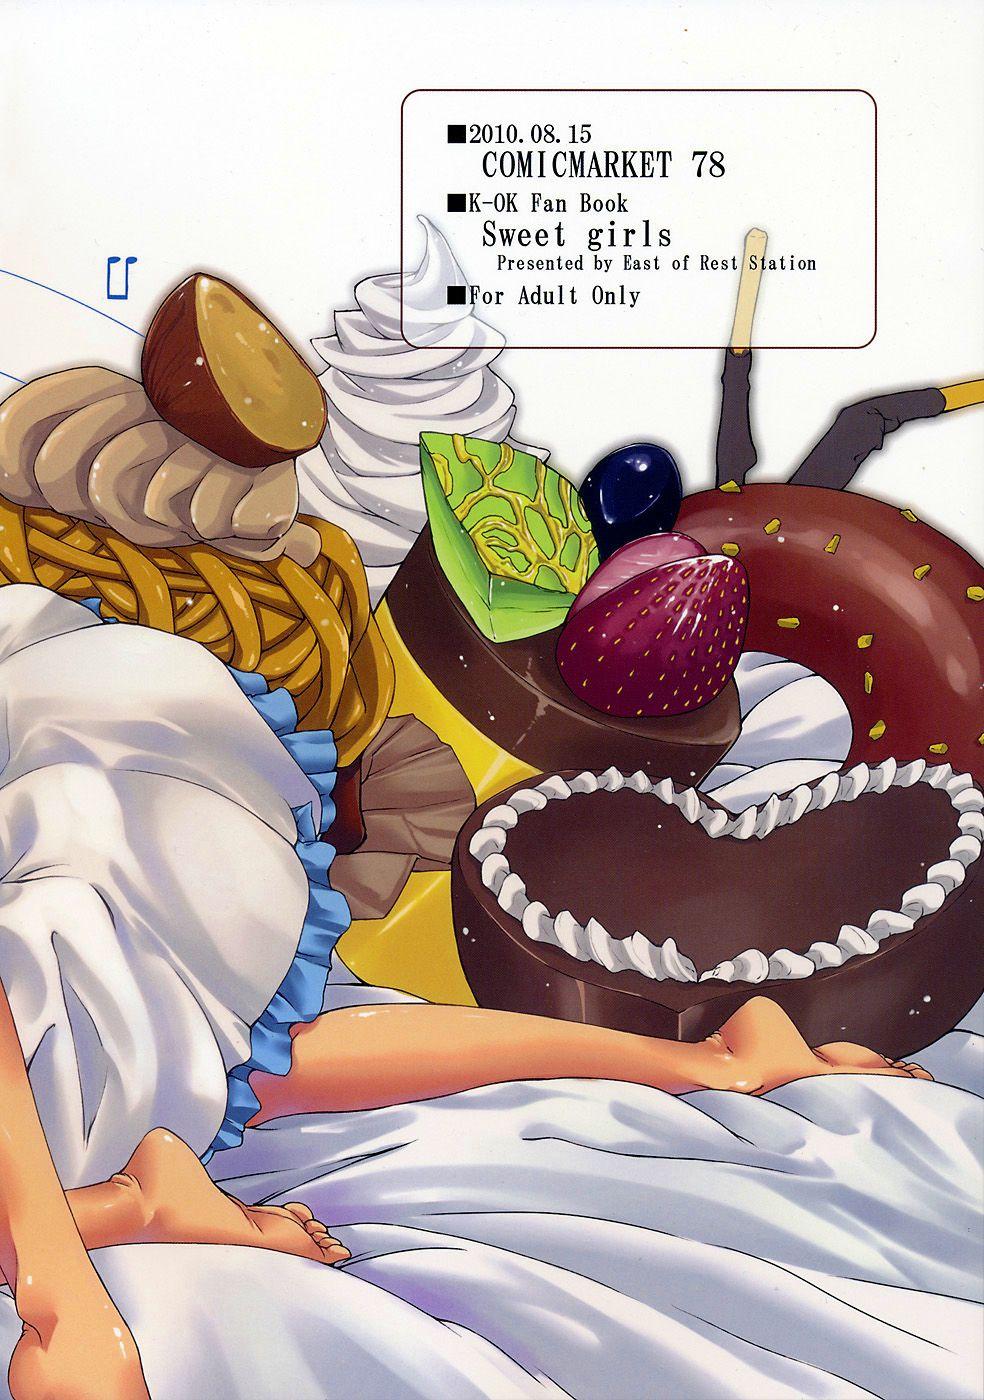 Masturbate Sweet girls - K-on Office - Page 26